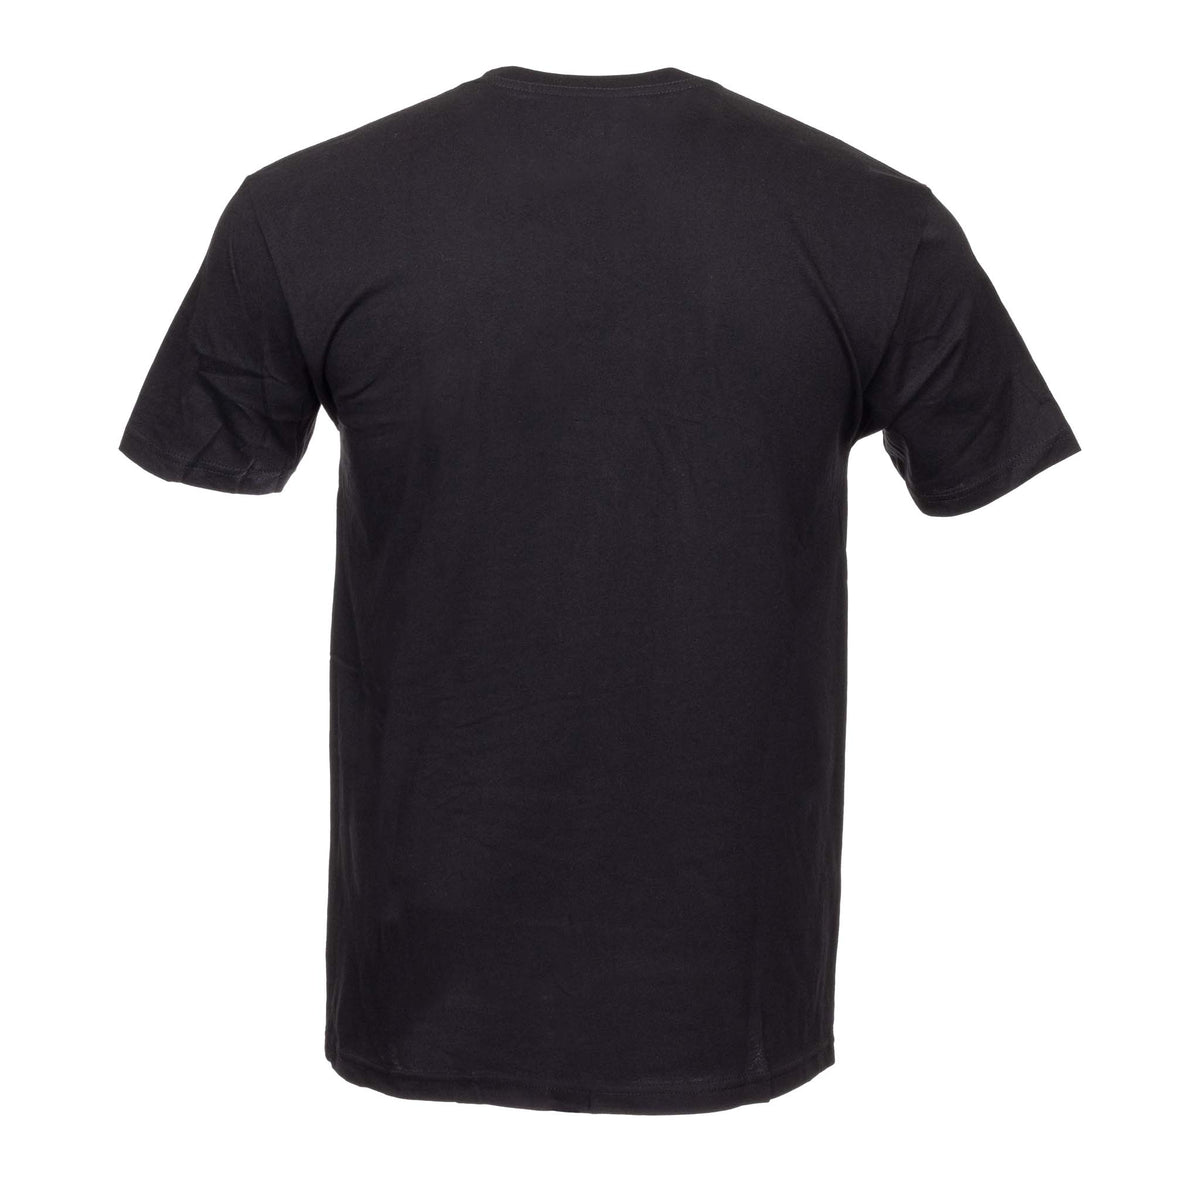 Sierra Nevada Pale-Porter-Stout T-Shirt Black - Back view